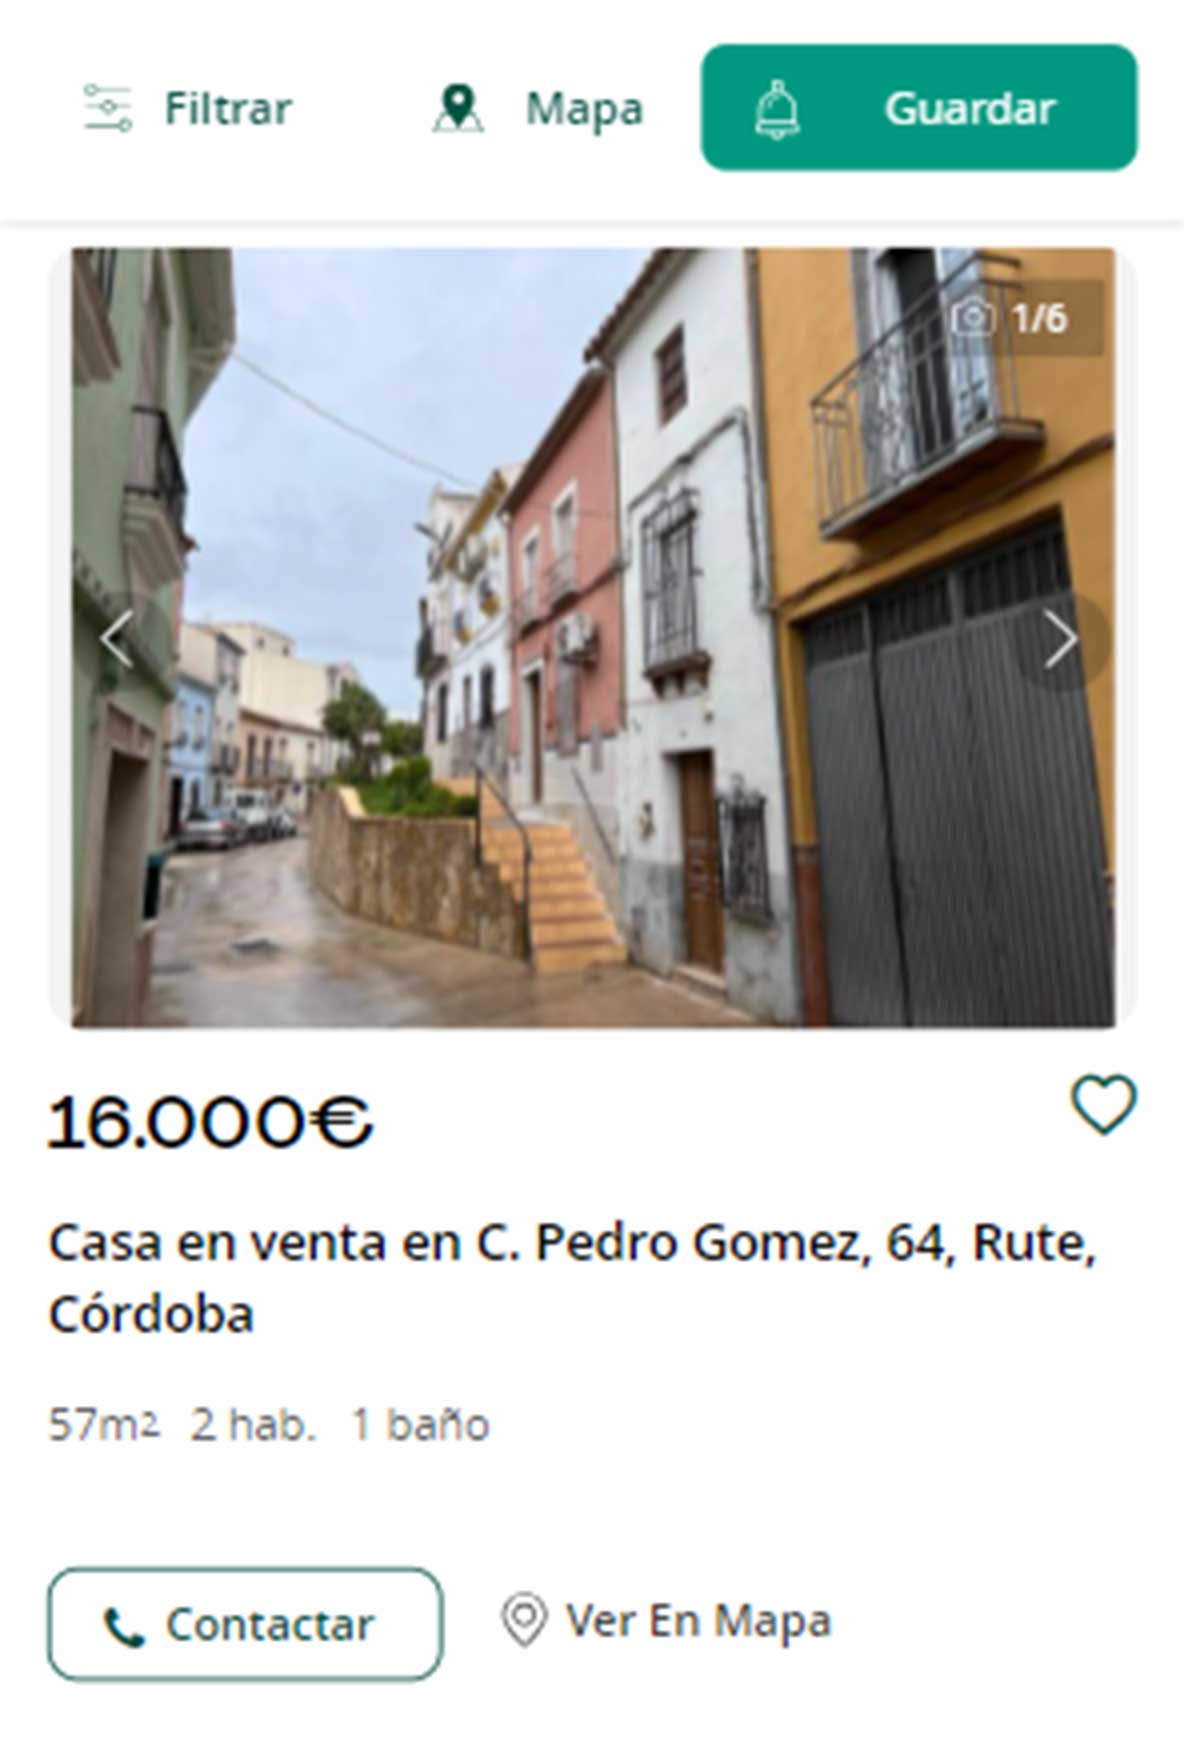 Piso a la venta en Córdoba por 16.000 euros